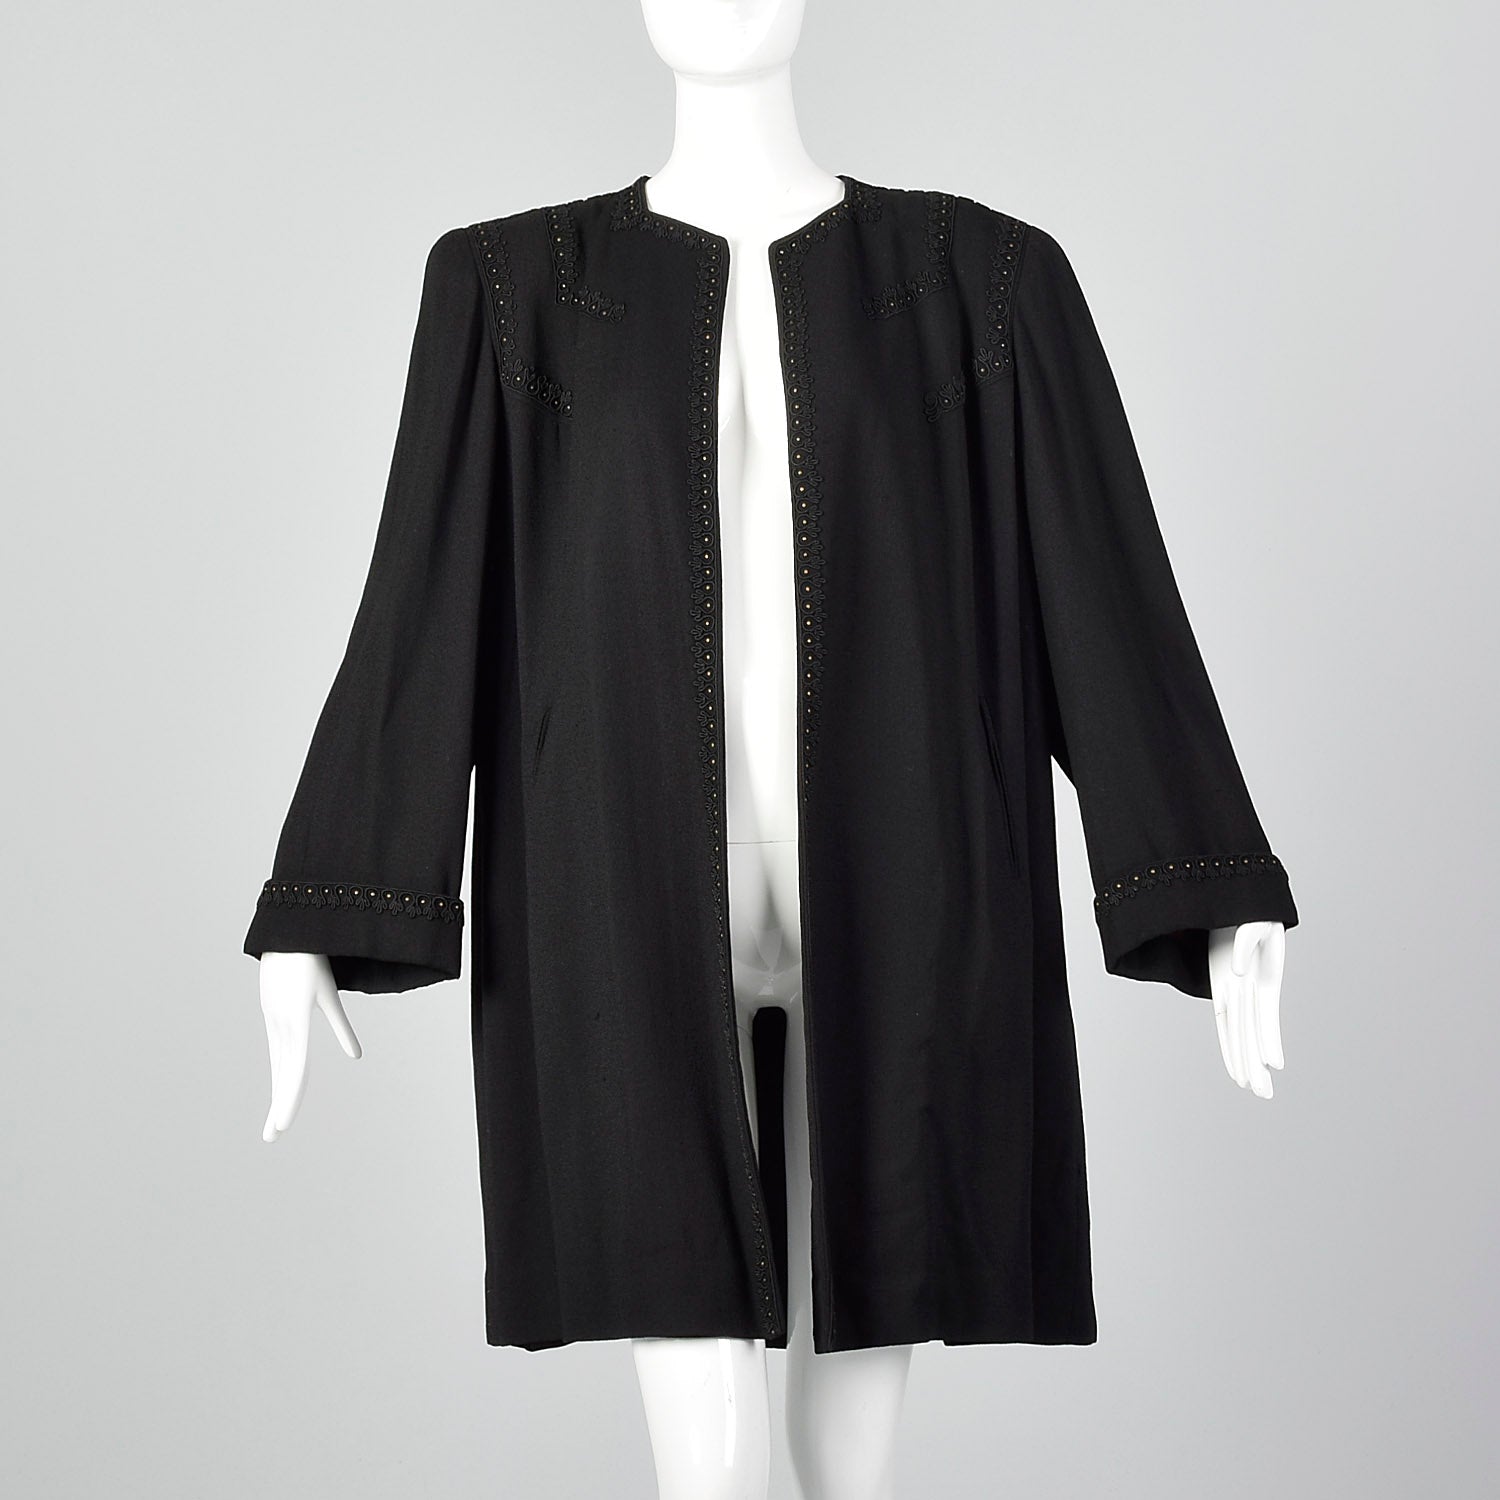 1940s Black Swing Coat with Soutache & Studs